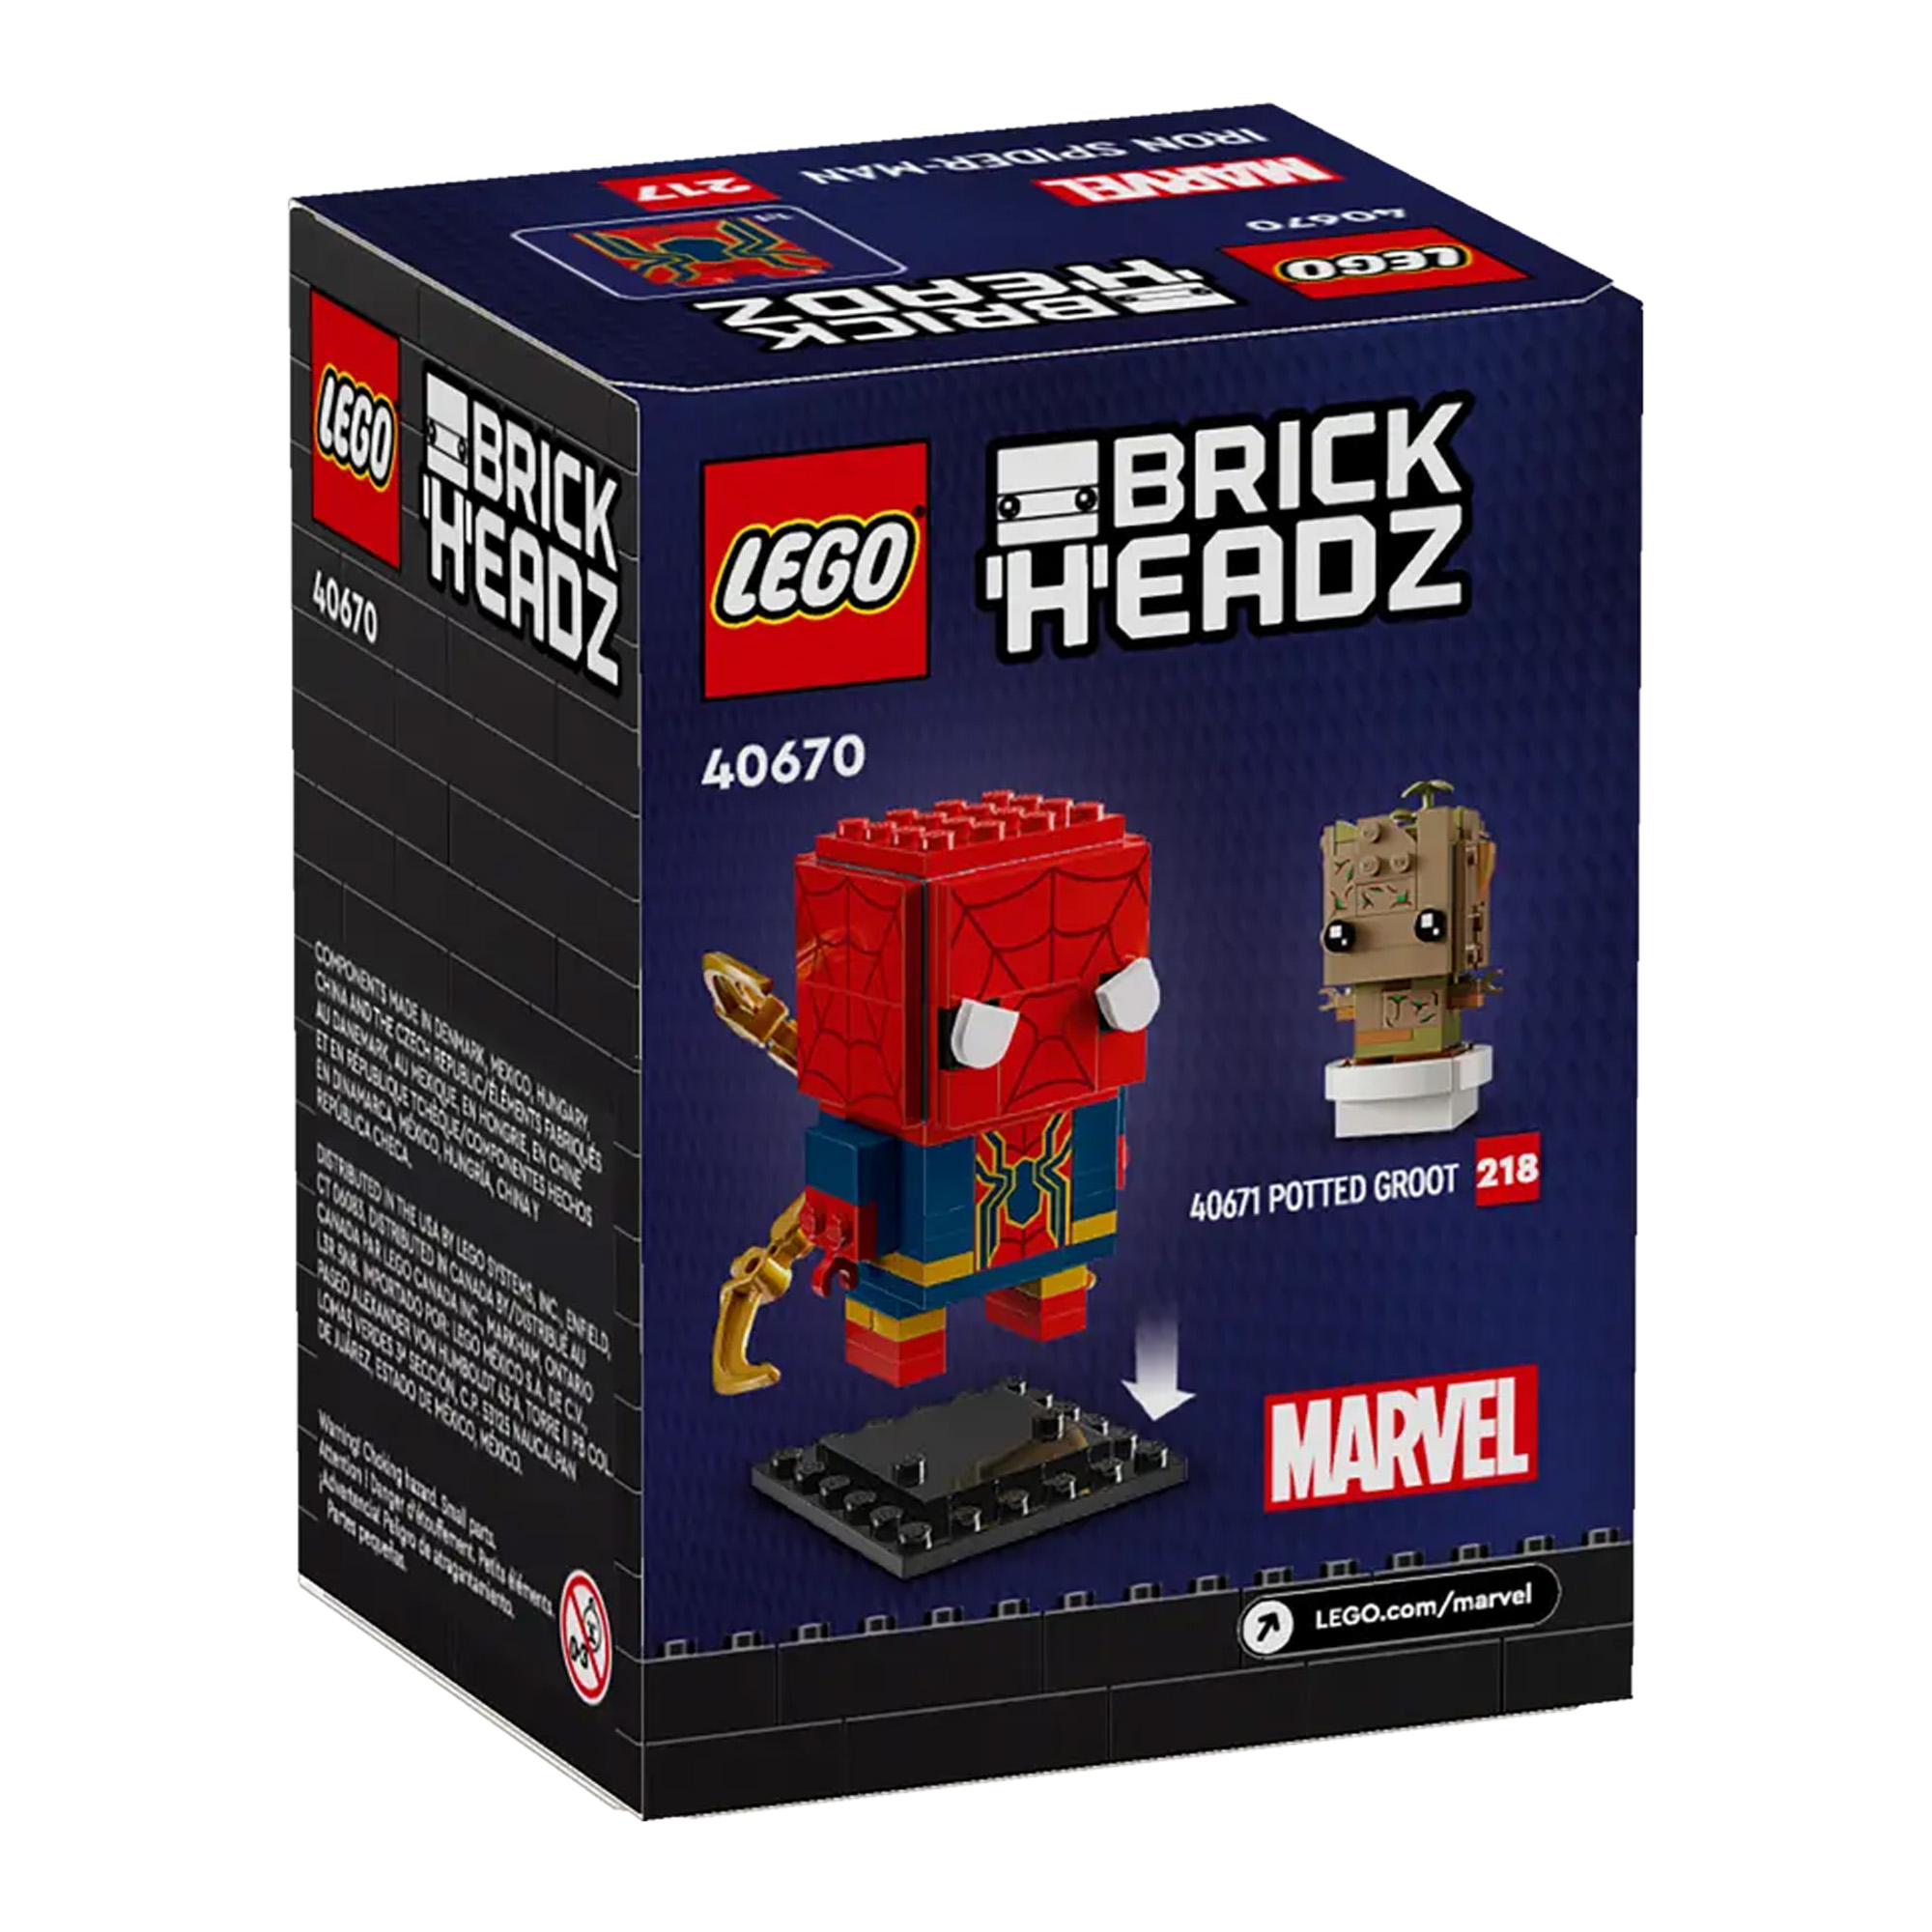 LEGO BrickHeadz Iron Spider-Man 40670 - Marvel